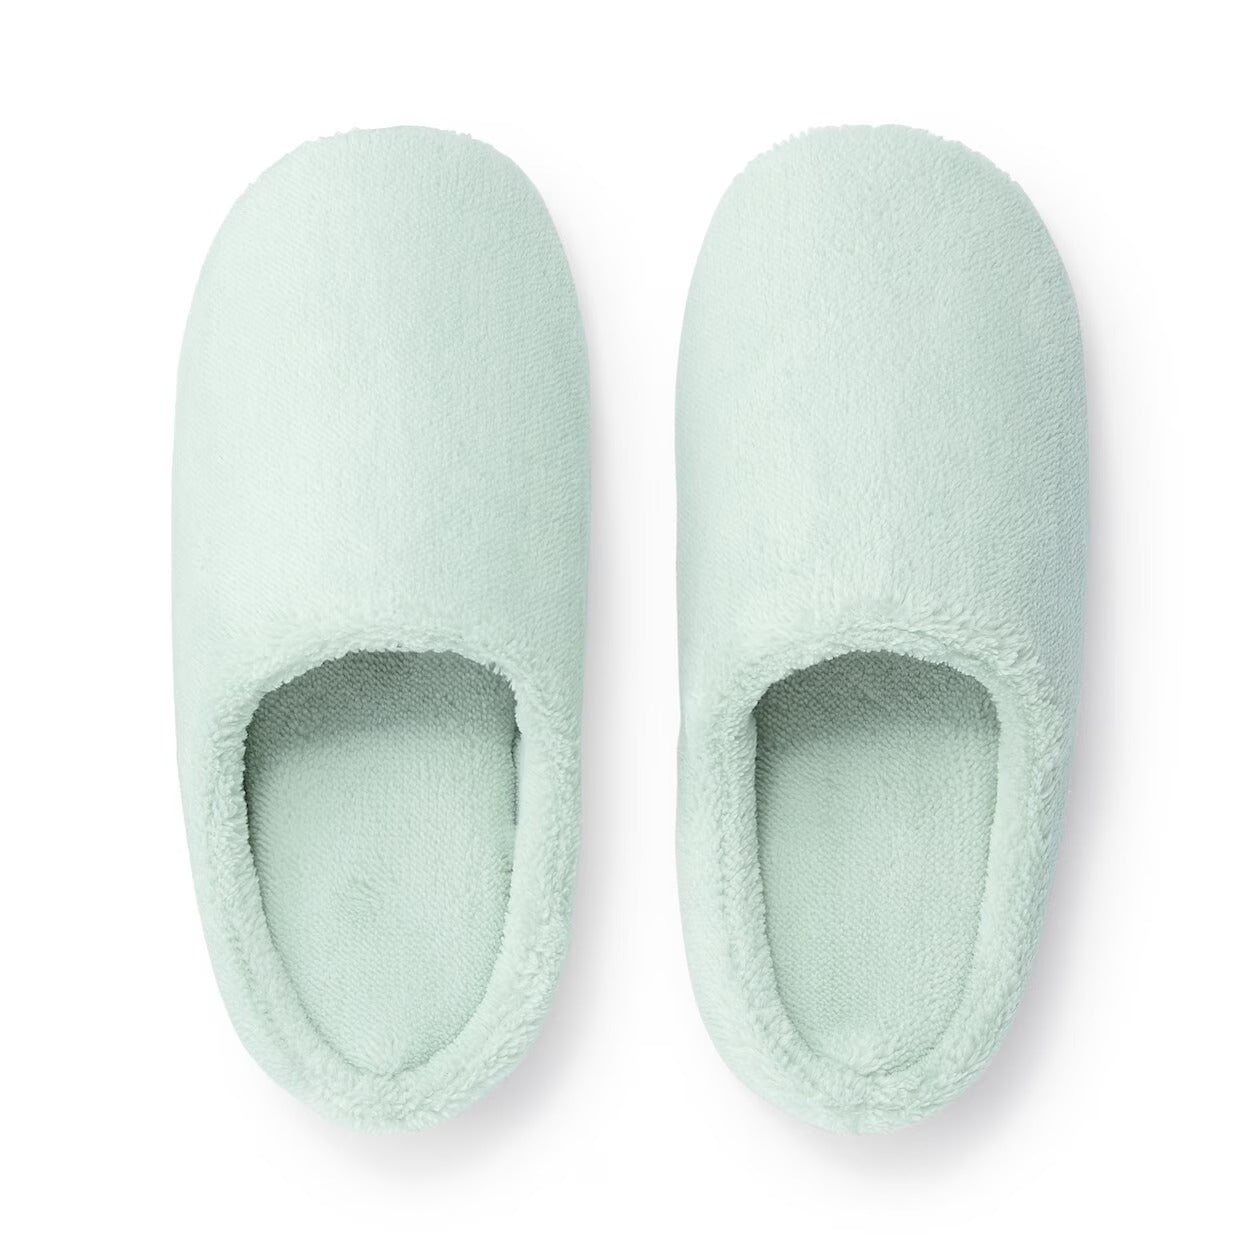 MUJI Warm fiber insole slippers Very popular!!